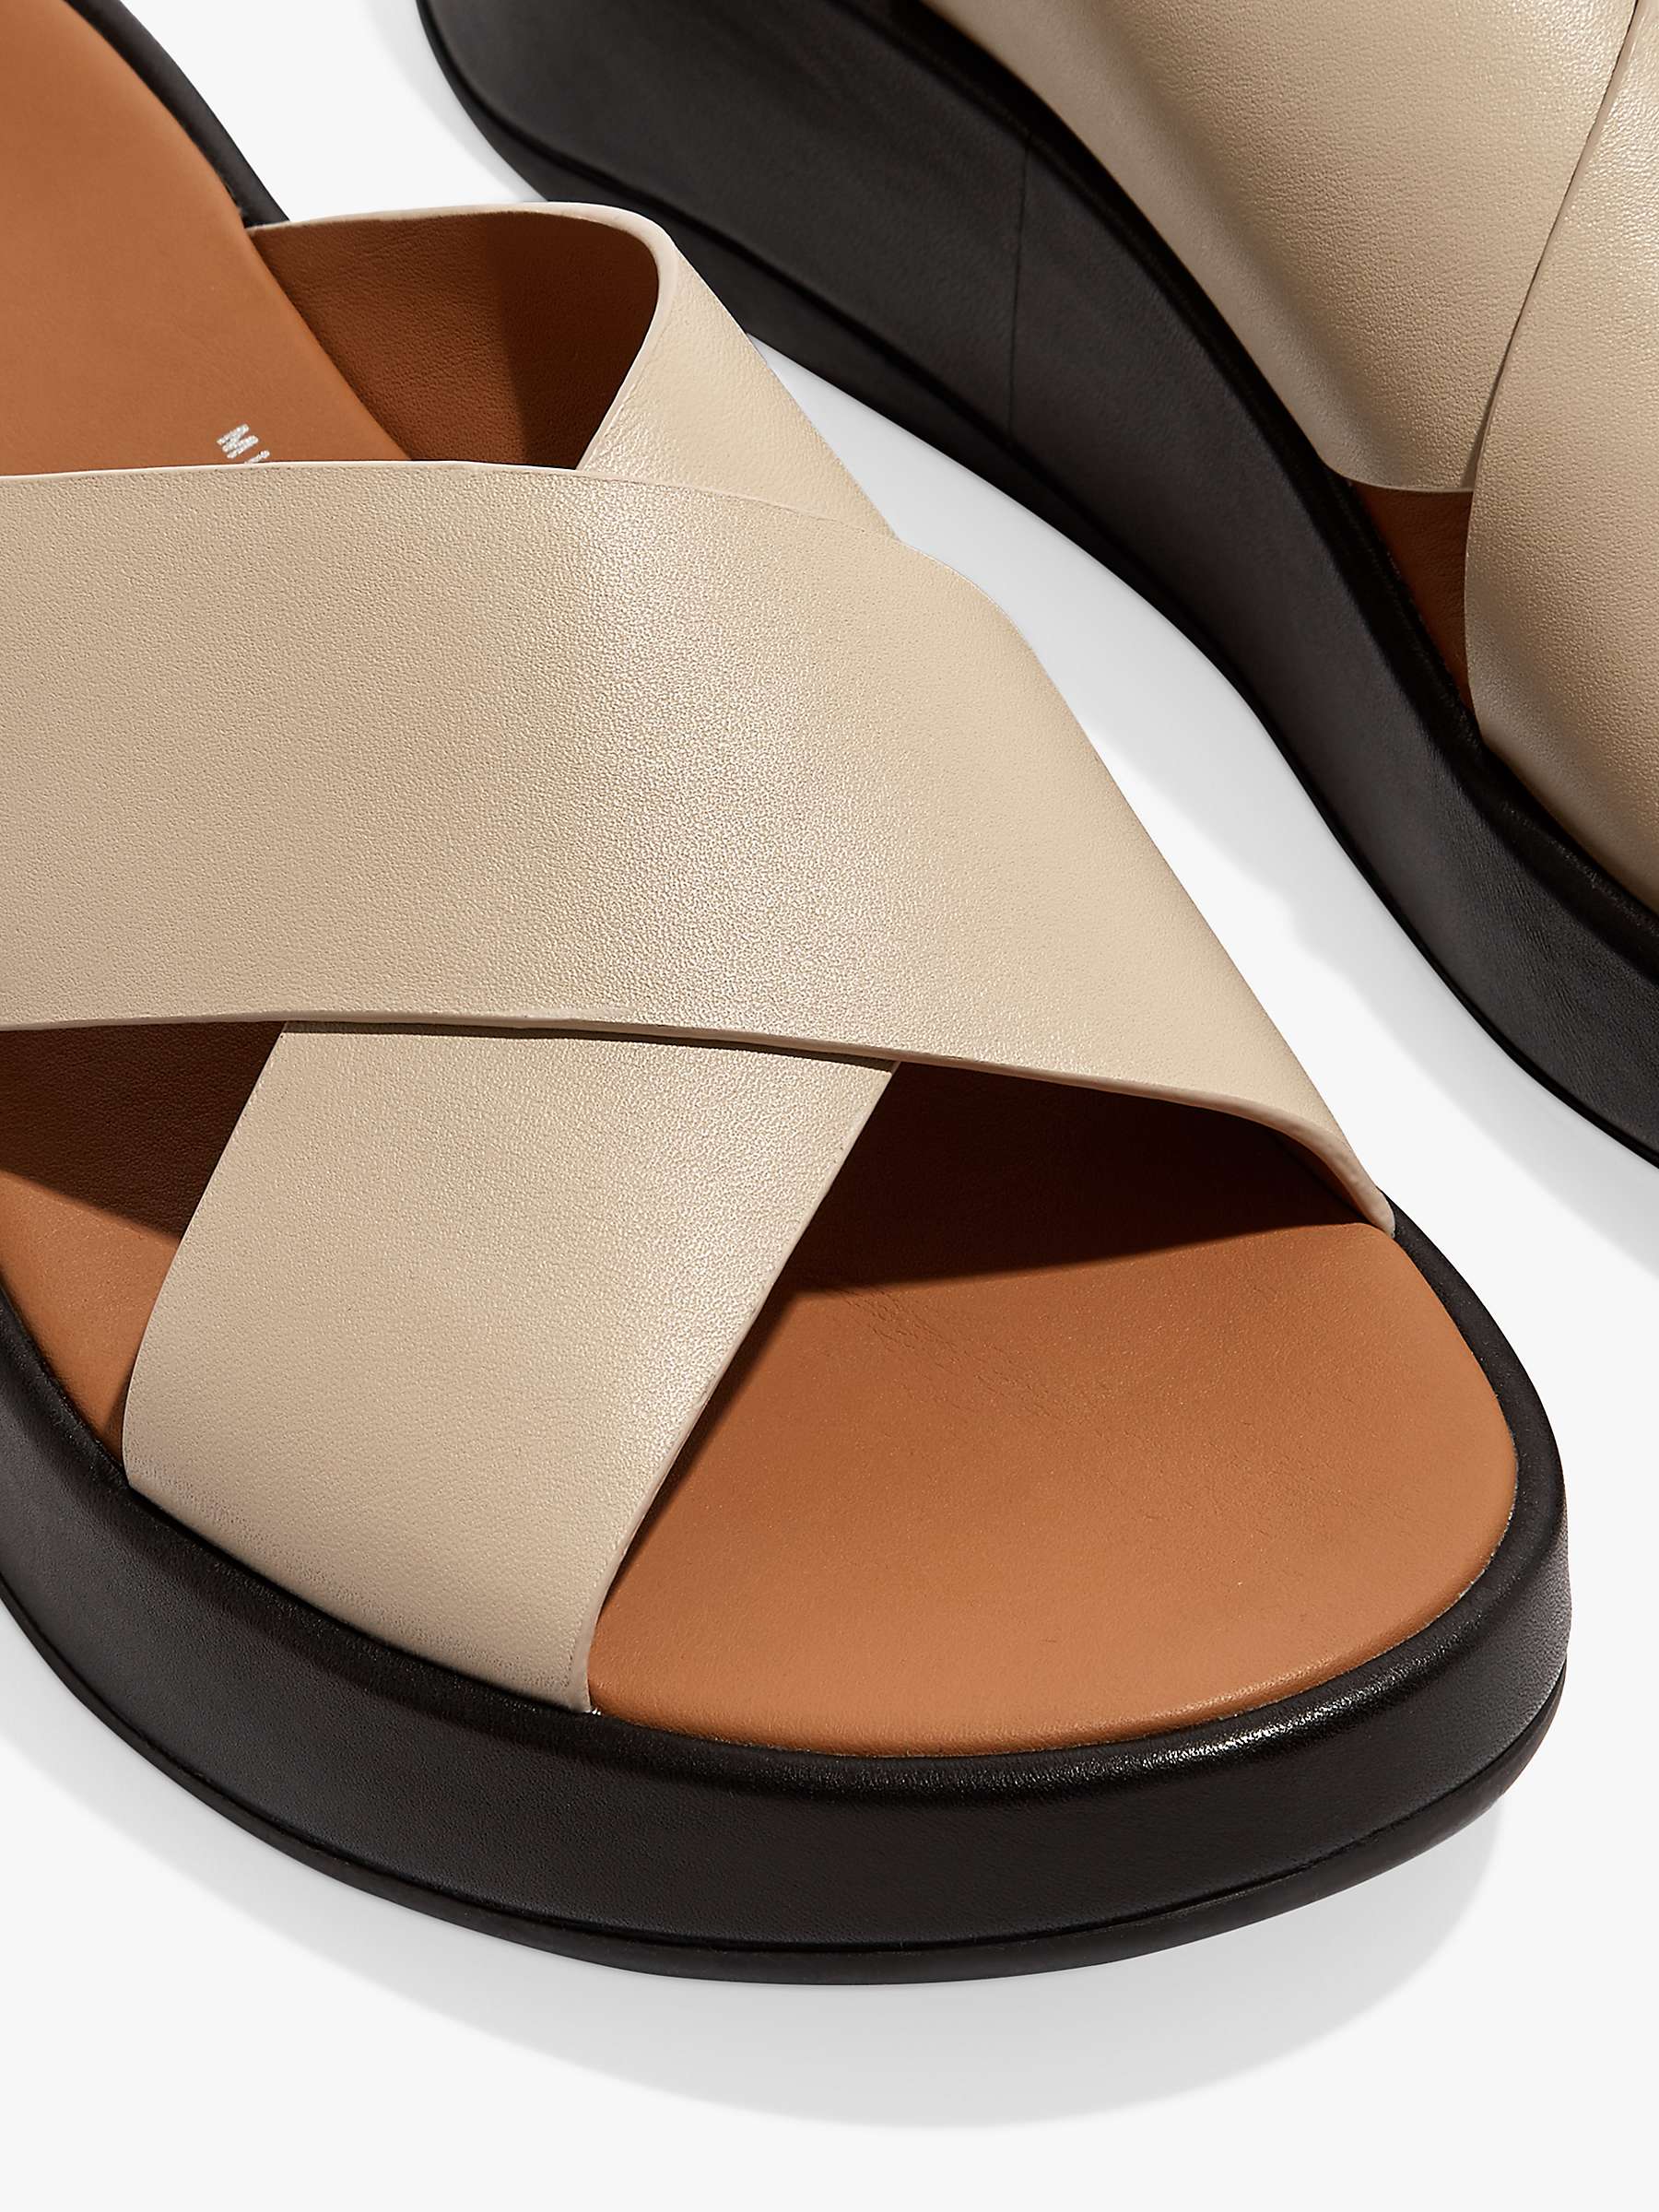 Buy FitFlop Fmode Luxe Leather Flatform Cross Slider Sandals, Beige/Black Online at johnlewis.com